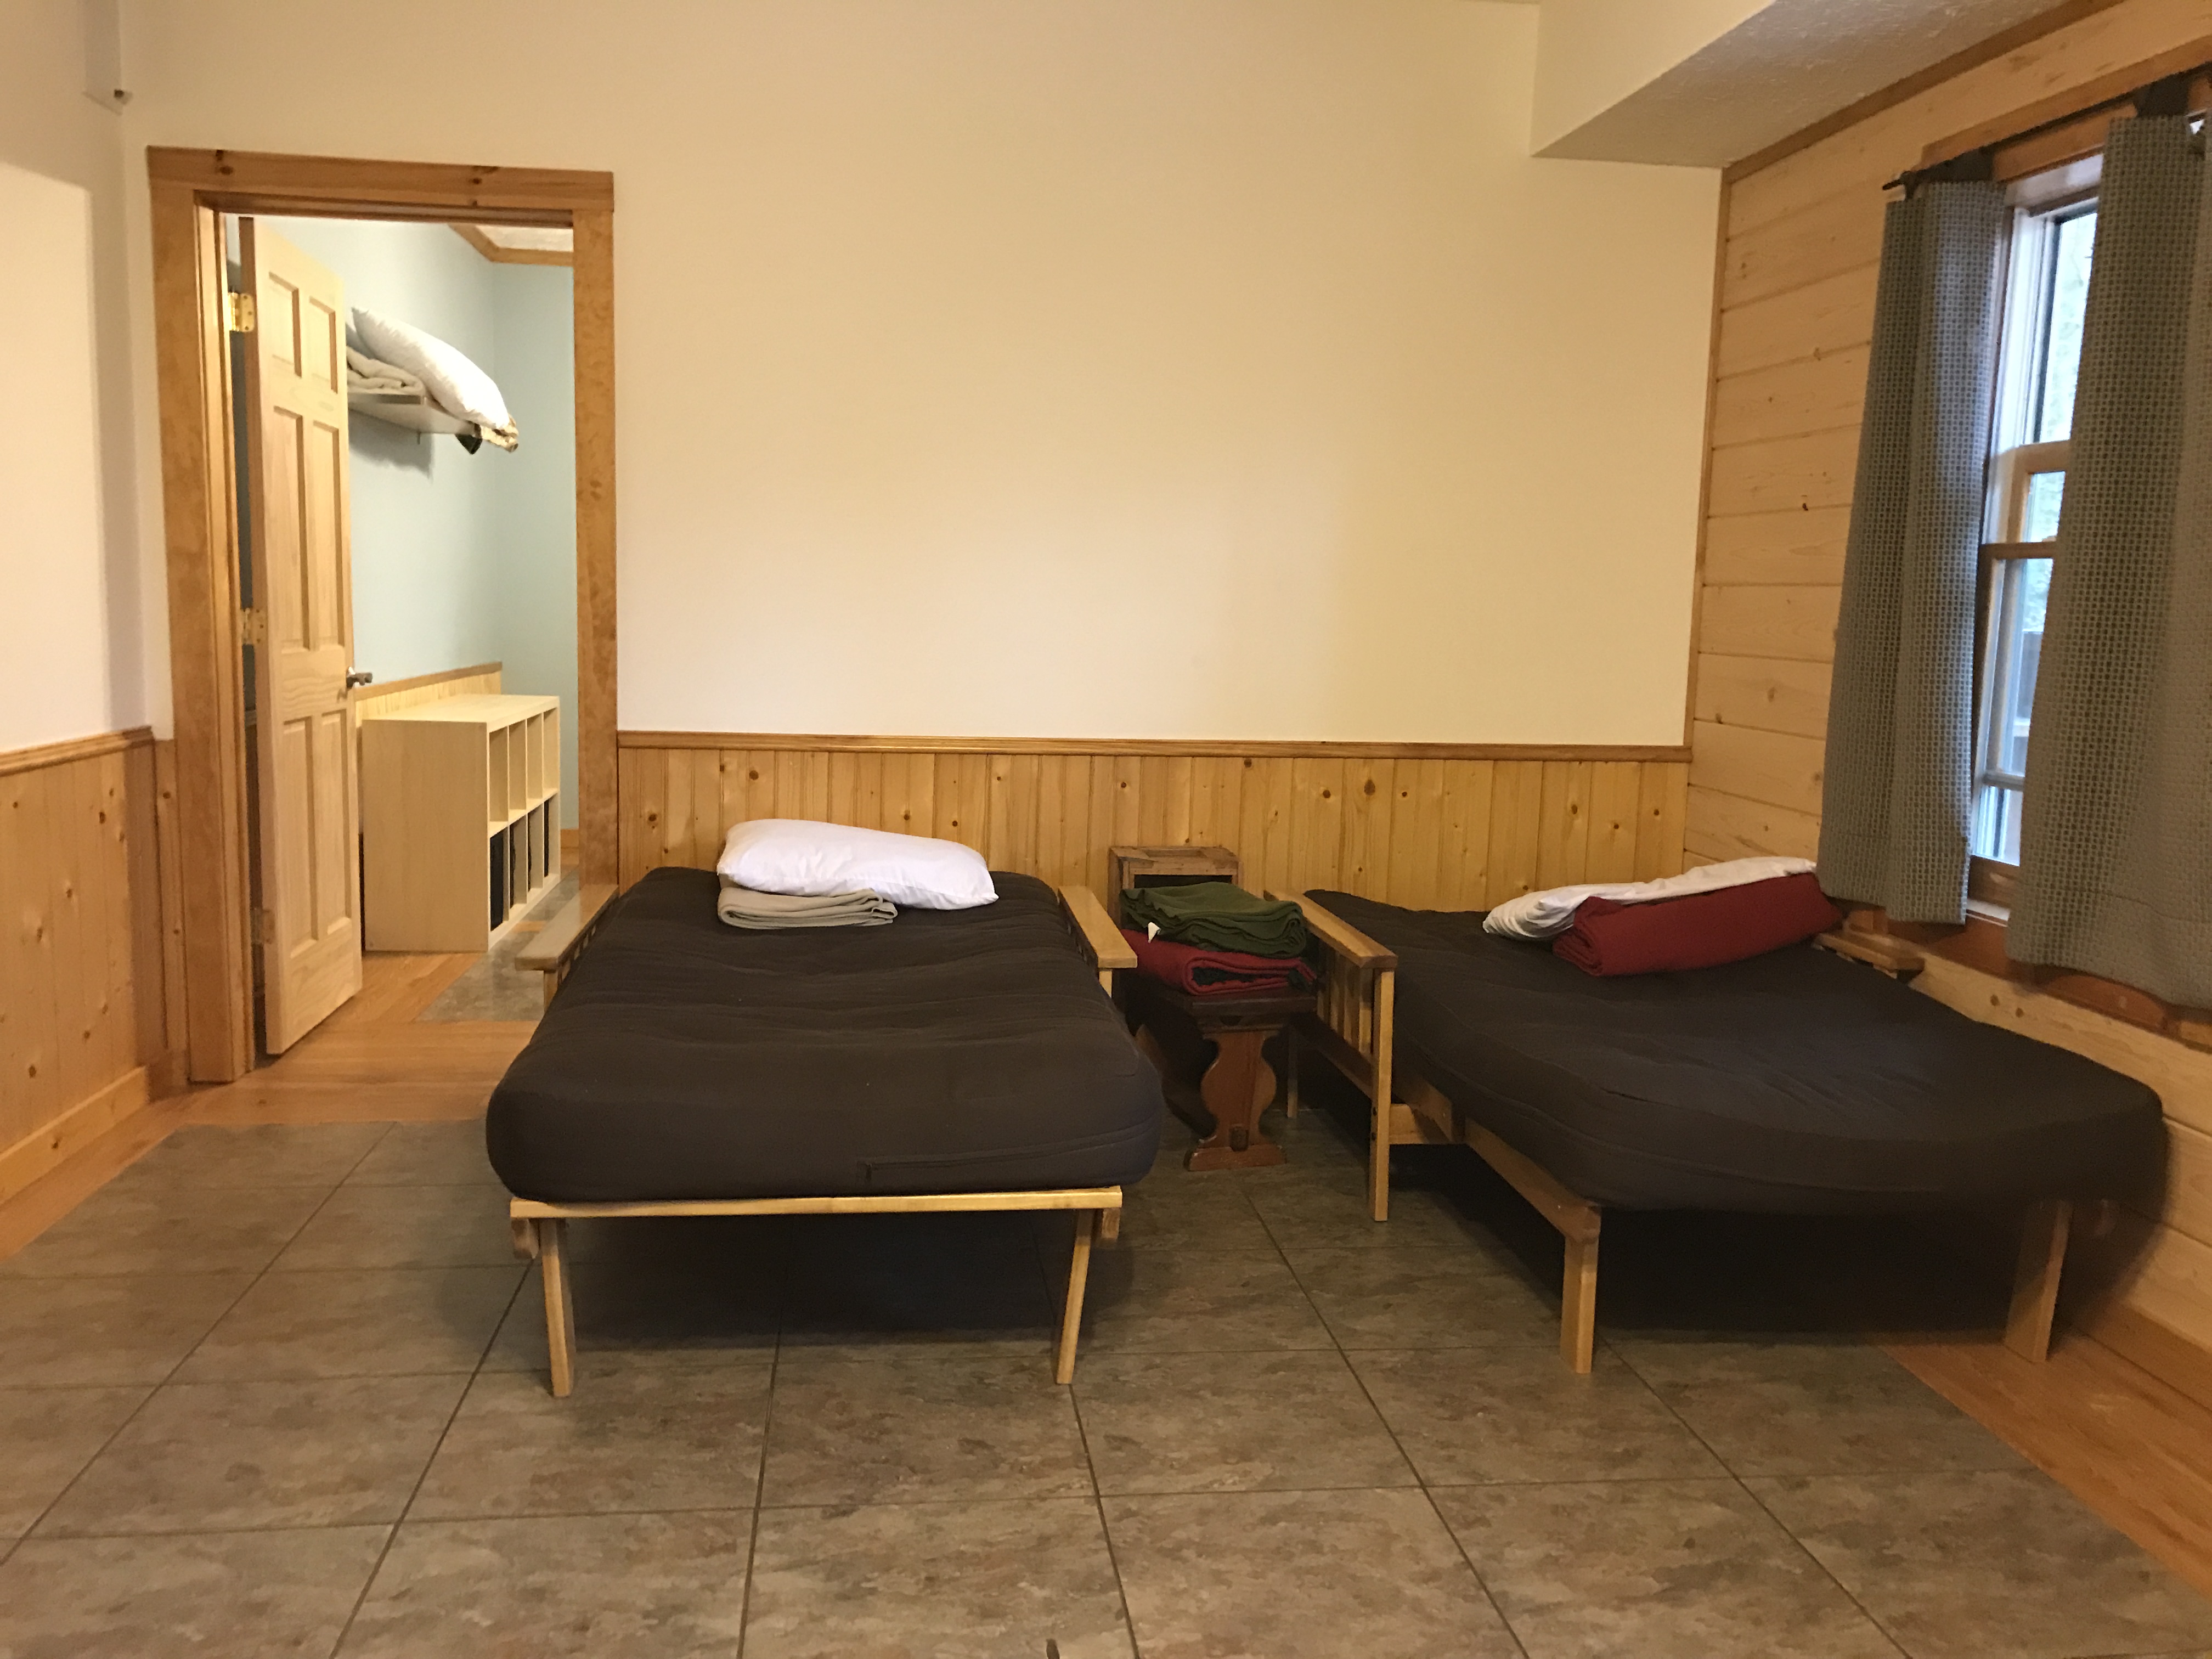 Hiker Hostel Beds